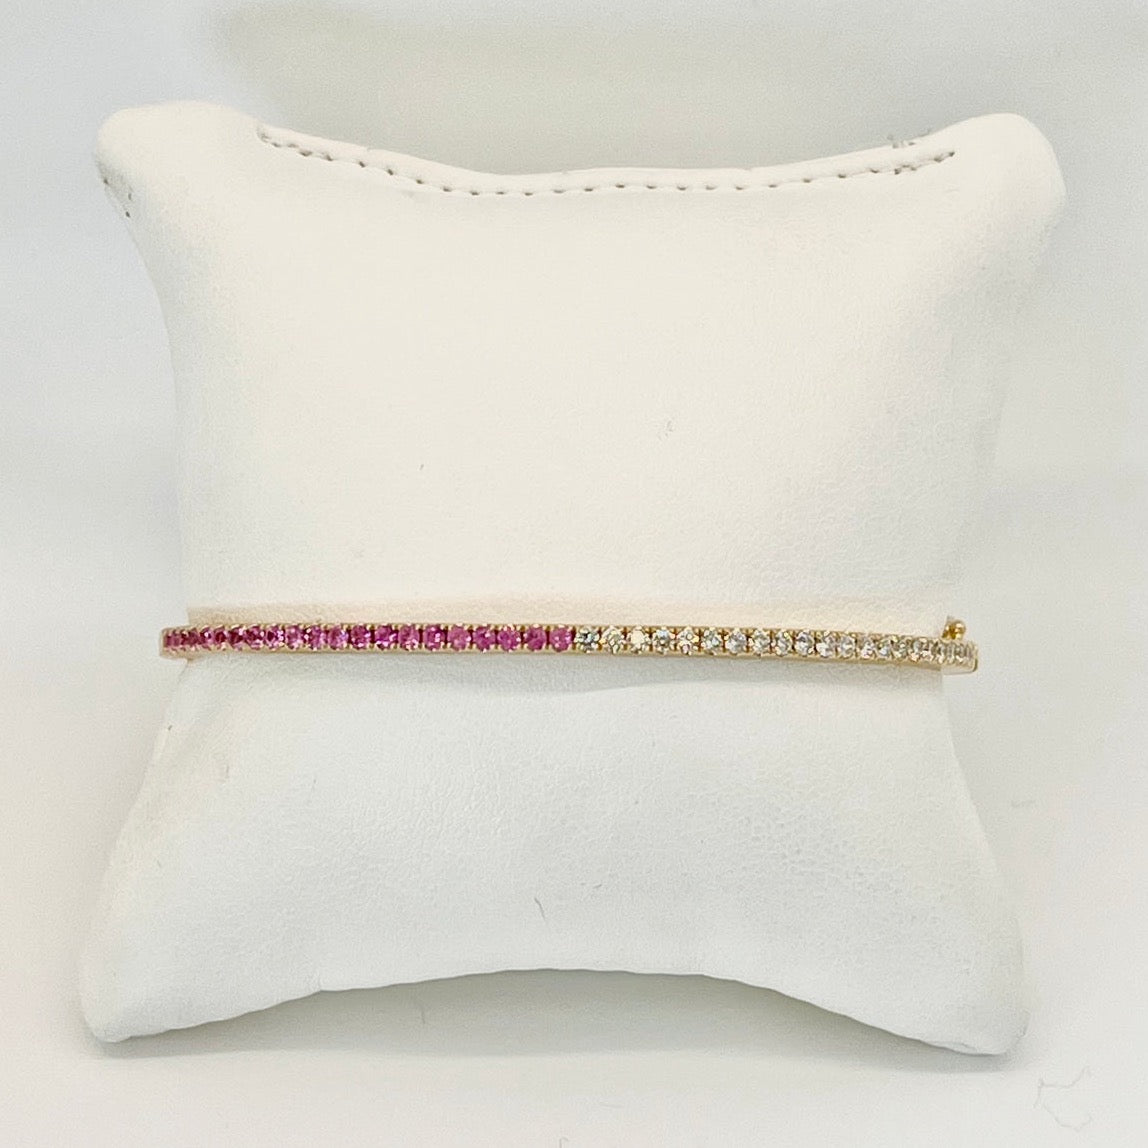 diamond and pink sapphire bangle bracelet